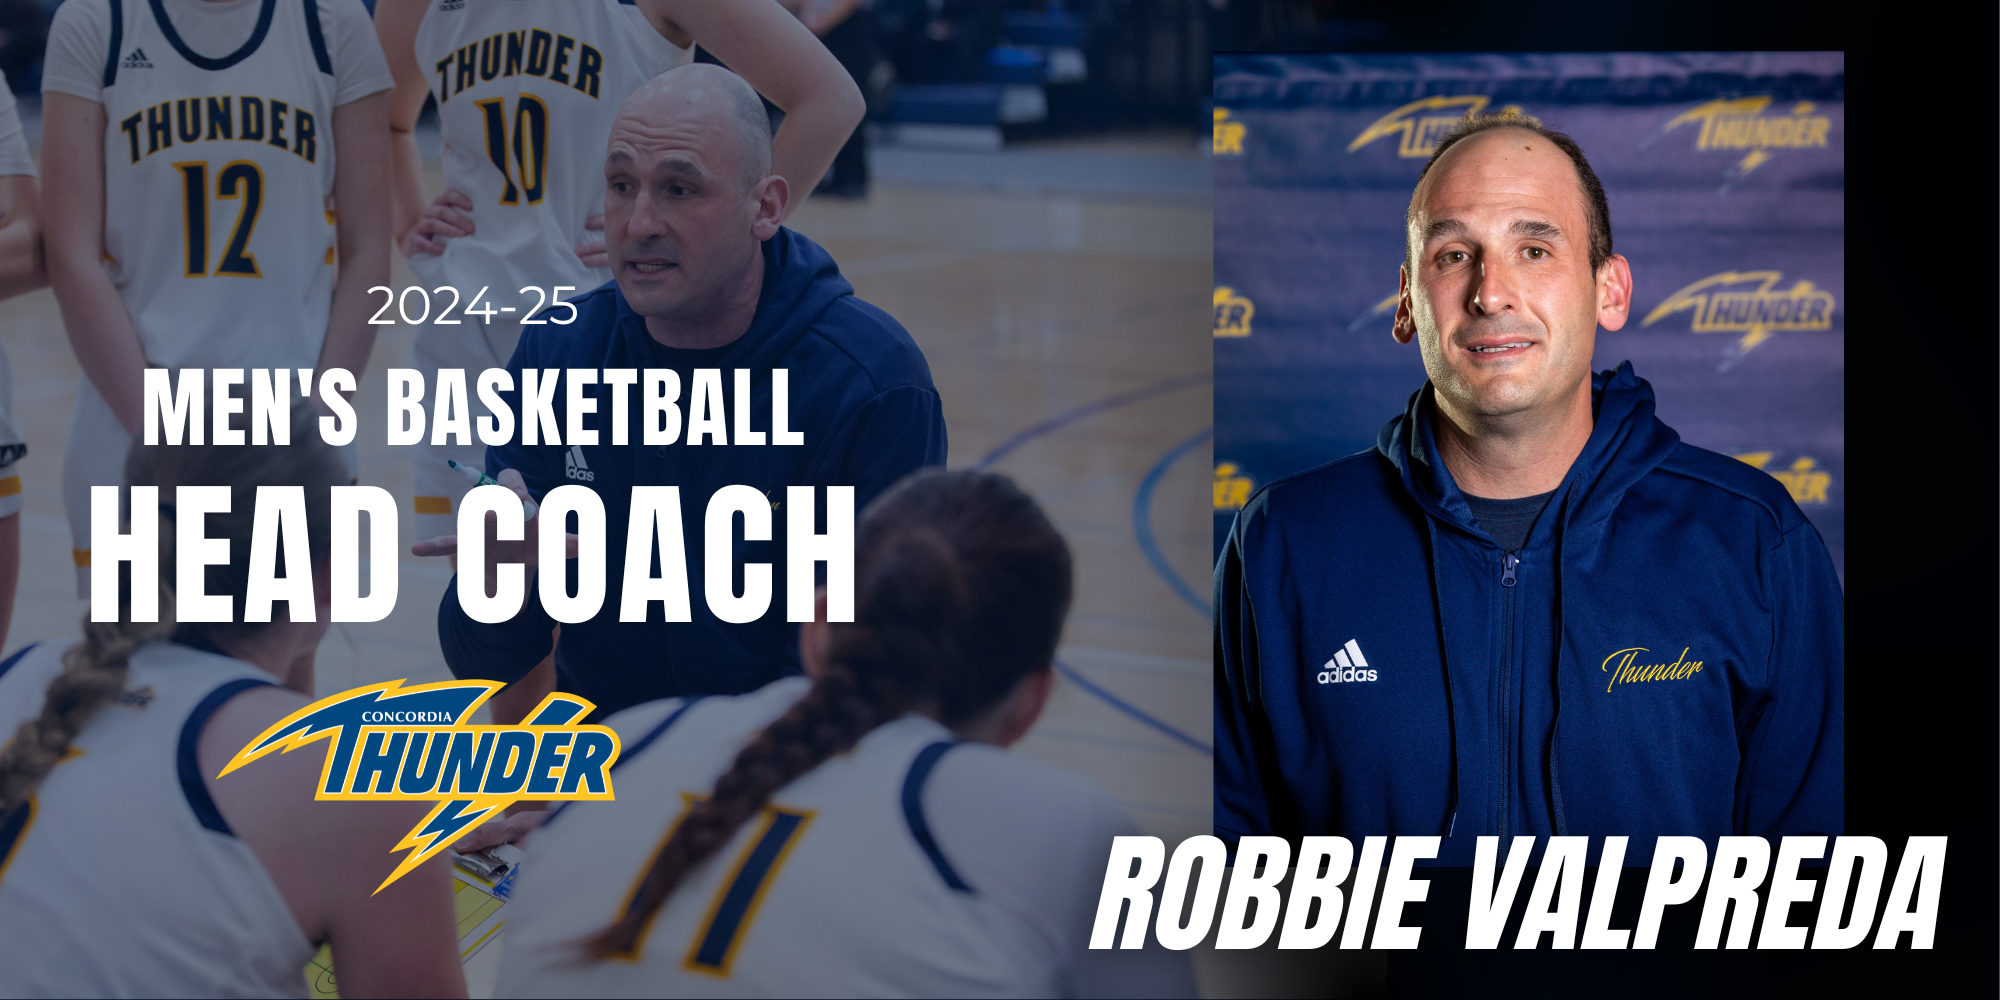 Robbie Valpreda Named Head Coach of Men's Basketball Program